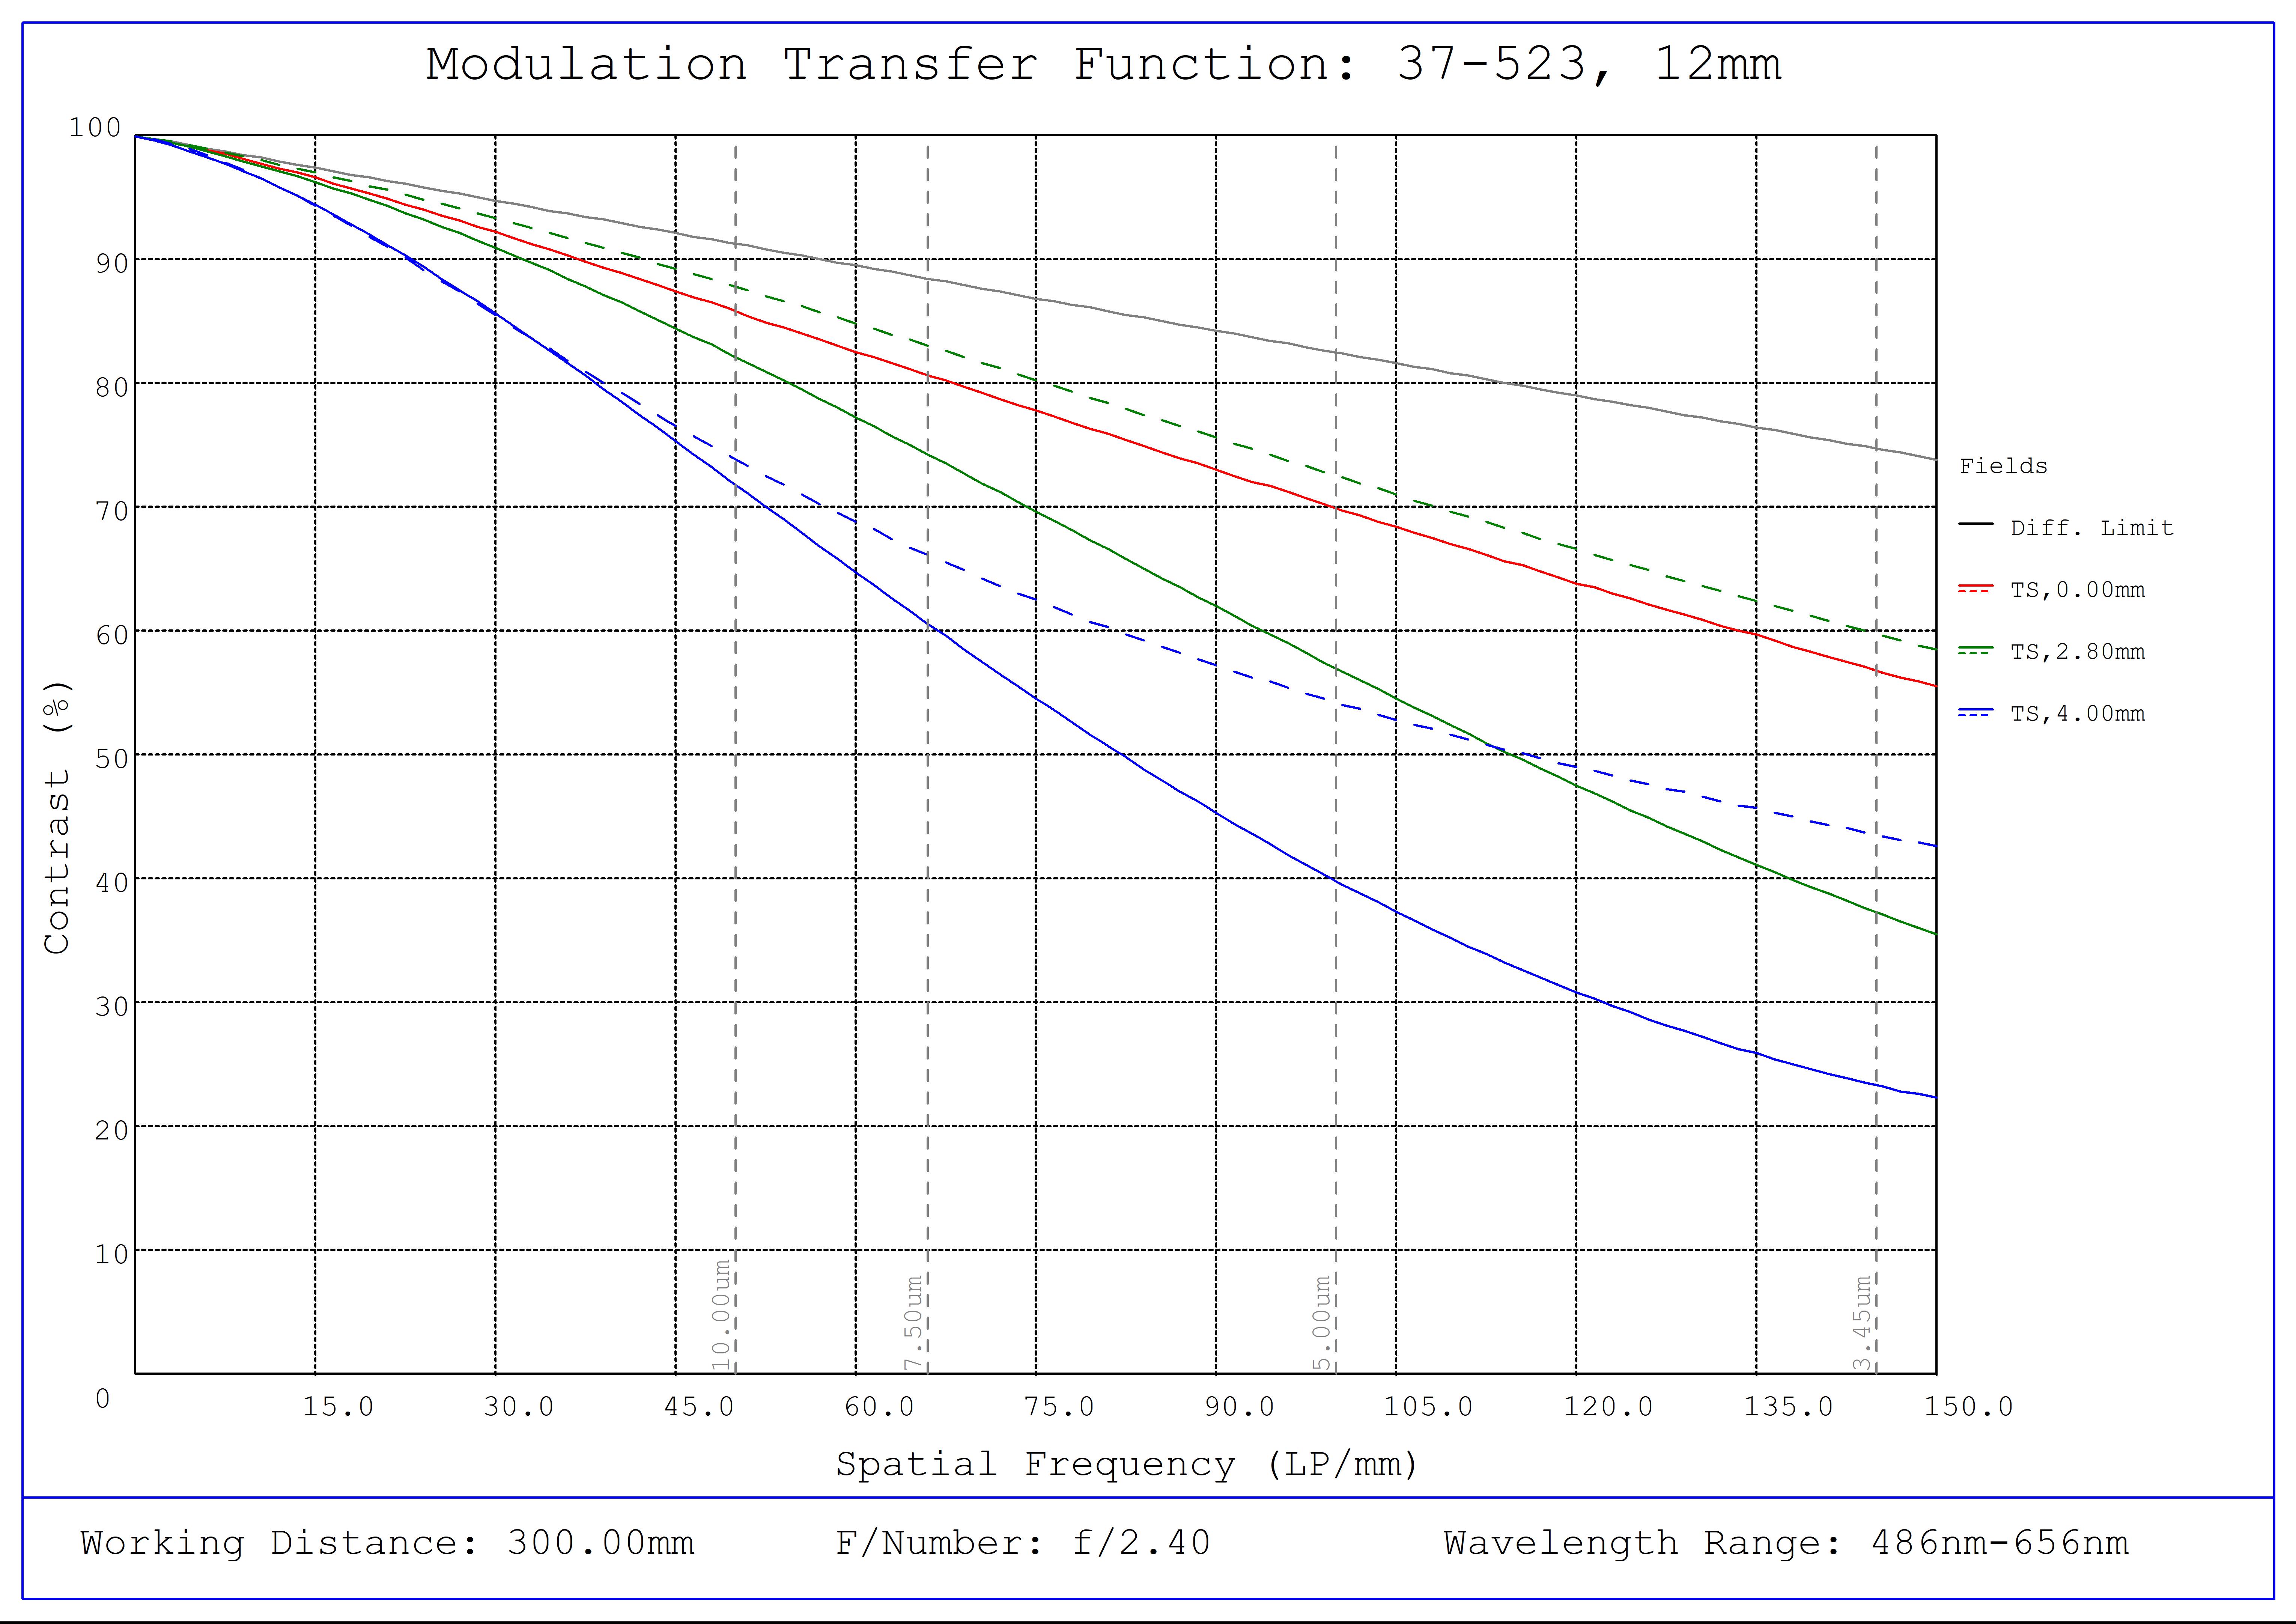 #37-523, 12mm FL, Liquid Lens M12 Lens, Modulated Transfer Function (MTF) Plot, 300mm Working Distance, f2.4